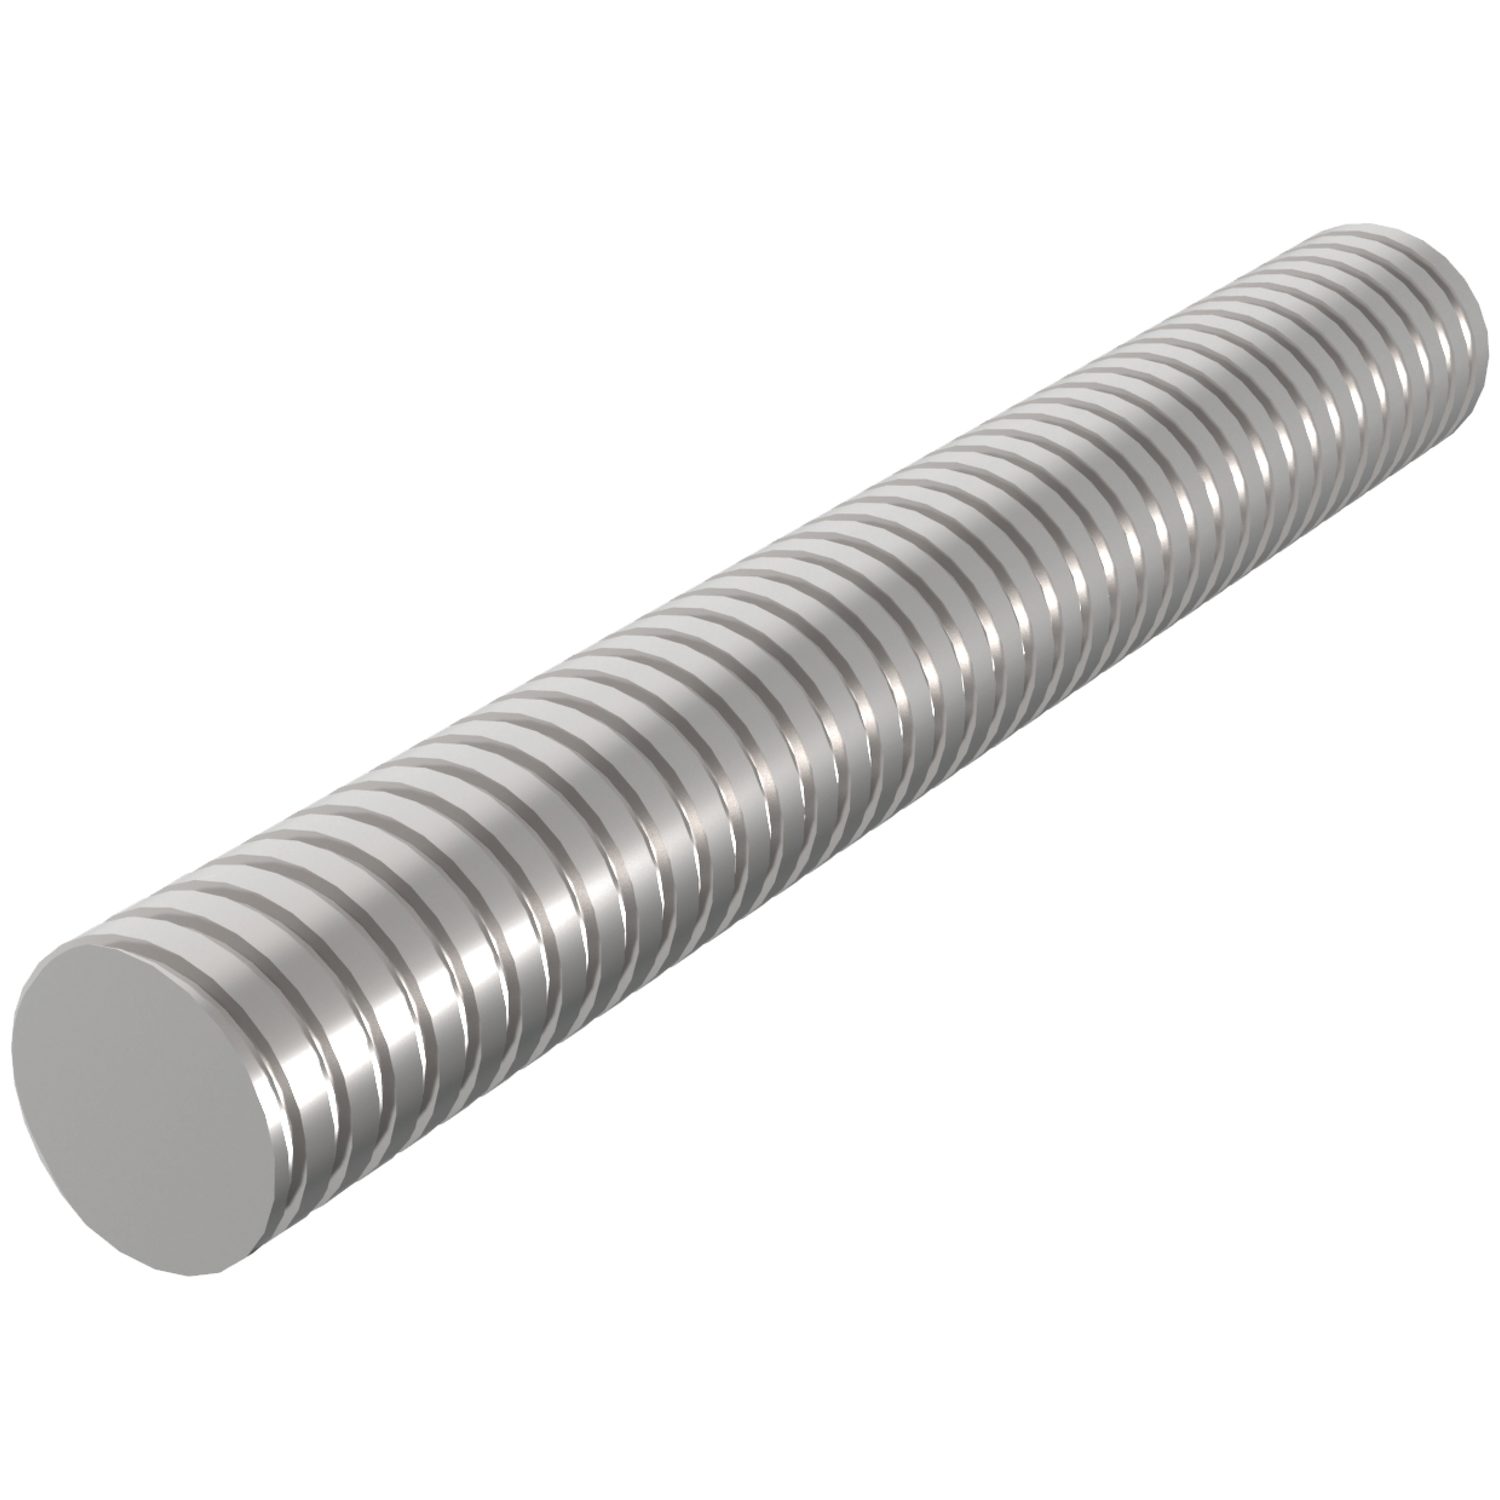 Steel Lead Screws Steel trapeziodal lead screws TR10 to 120. Right hand thread.